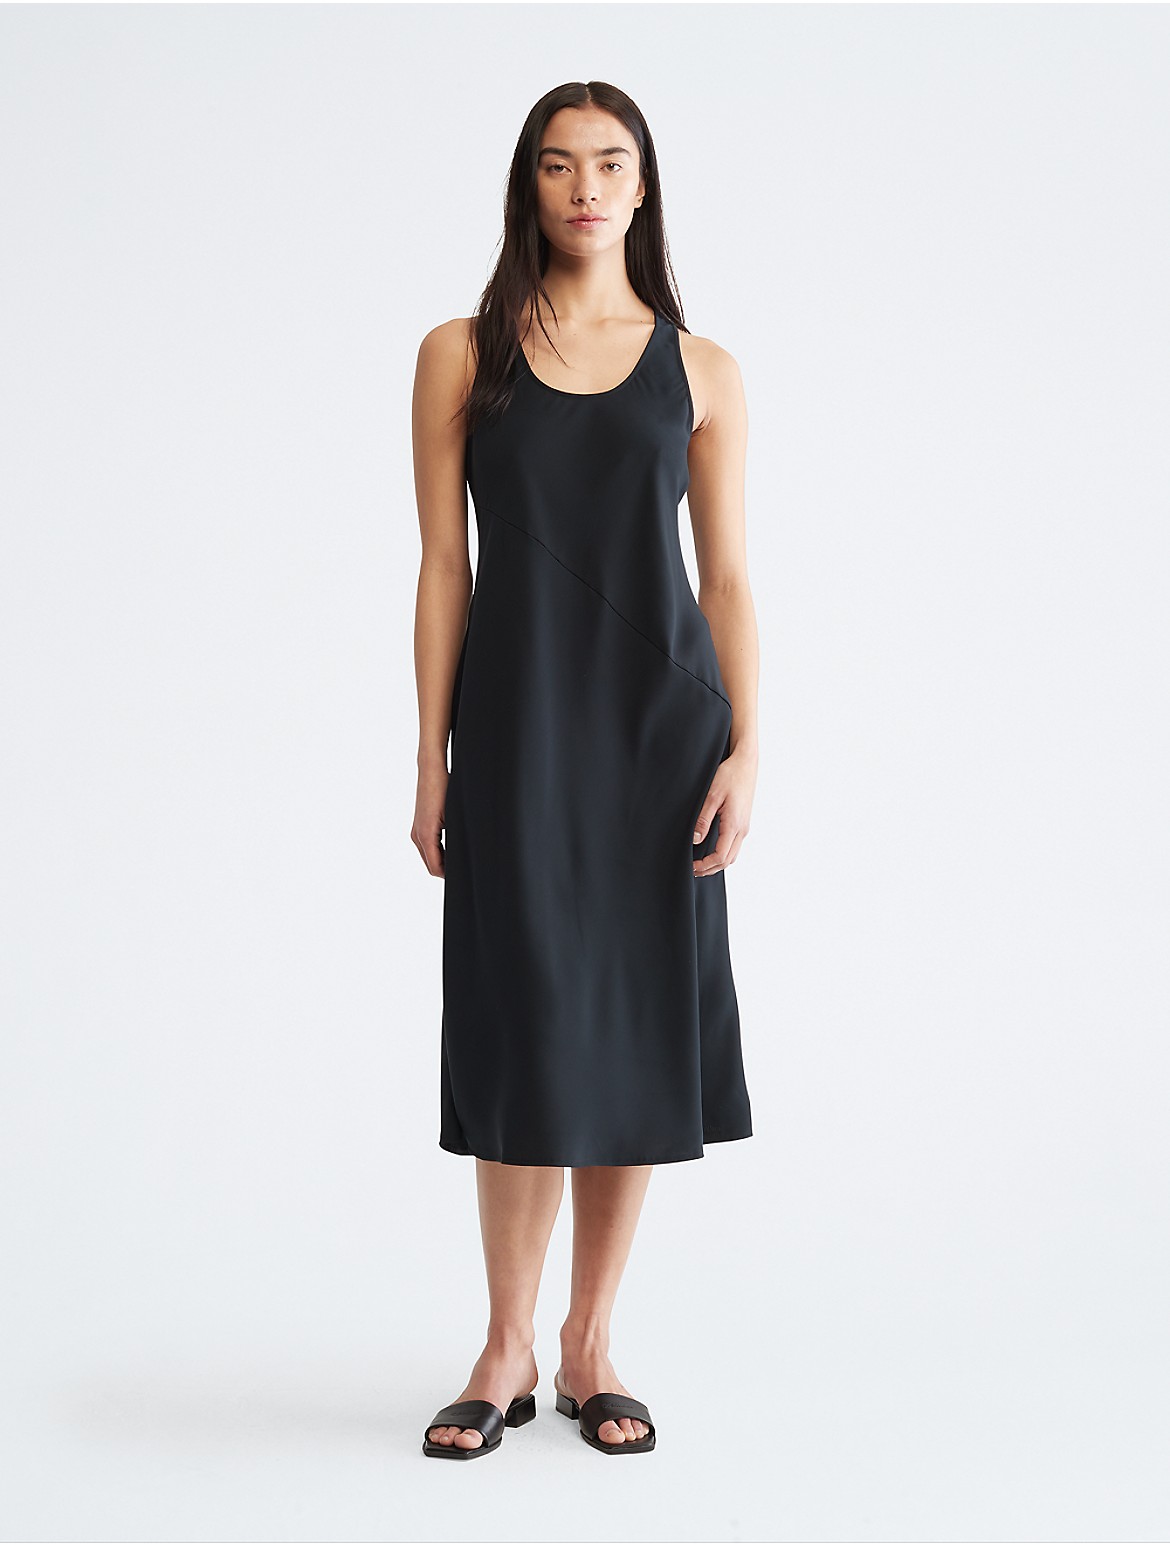 Calvin Klein Women's Scoopneck Midi Tank Dress - Black - S